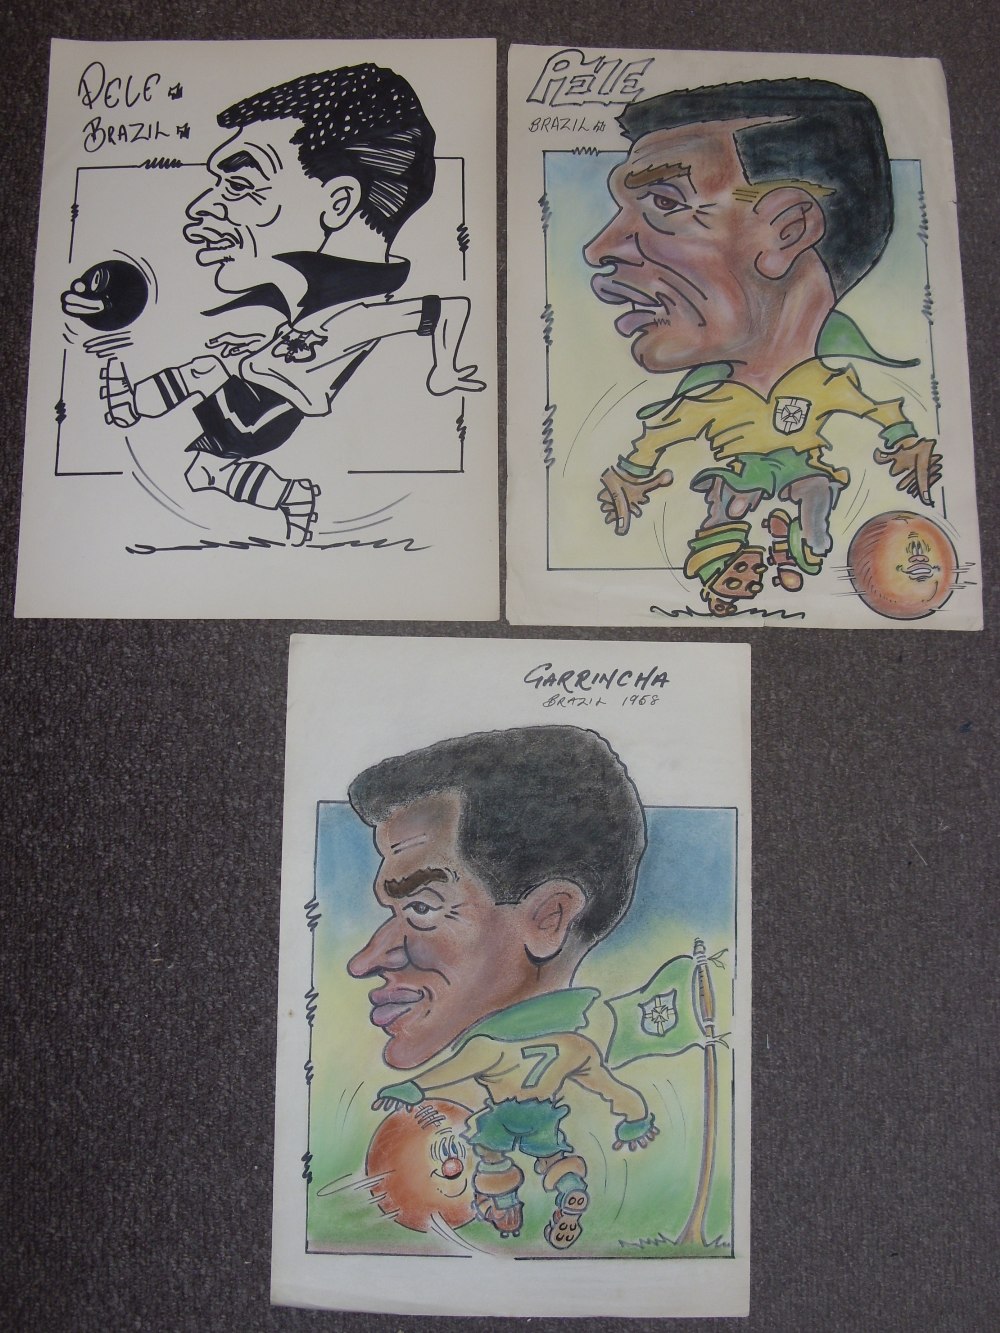 1950's/1960's Brazil - Pele & Garrincha, Outstanding Caricature/Cartoon Original & highly